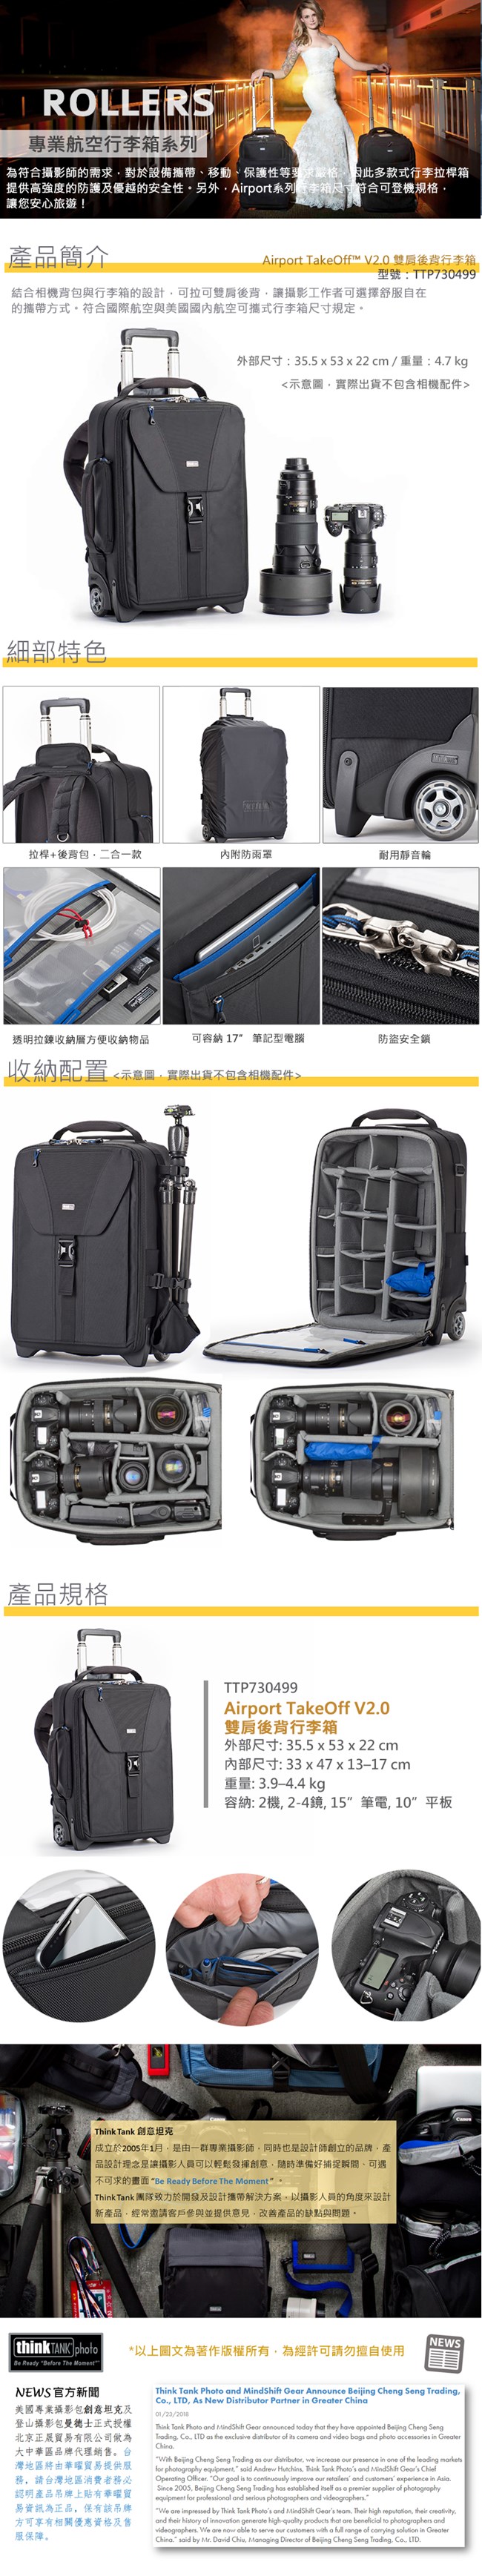 thinkTank 創意坦克 Airport TakeOff V2.0 雙肩後背行李箱